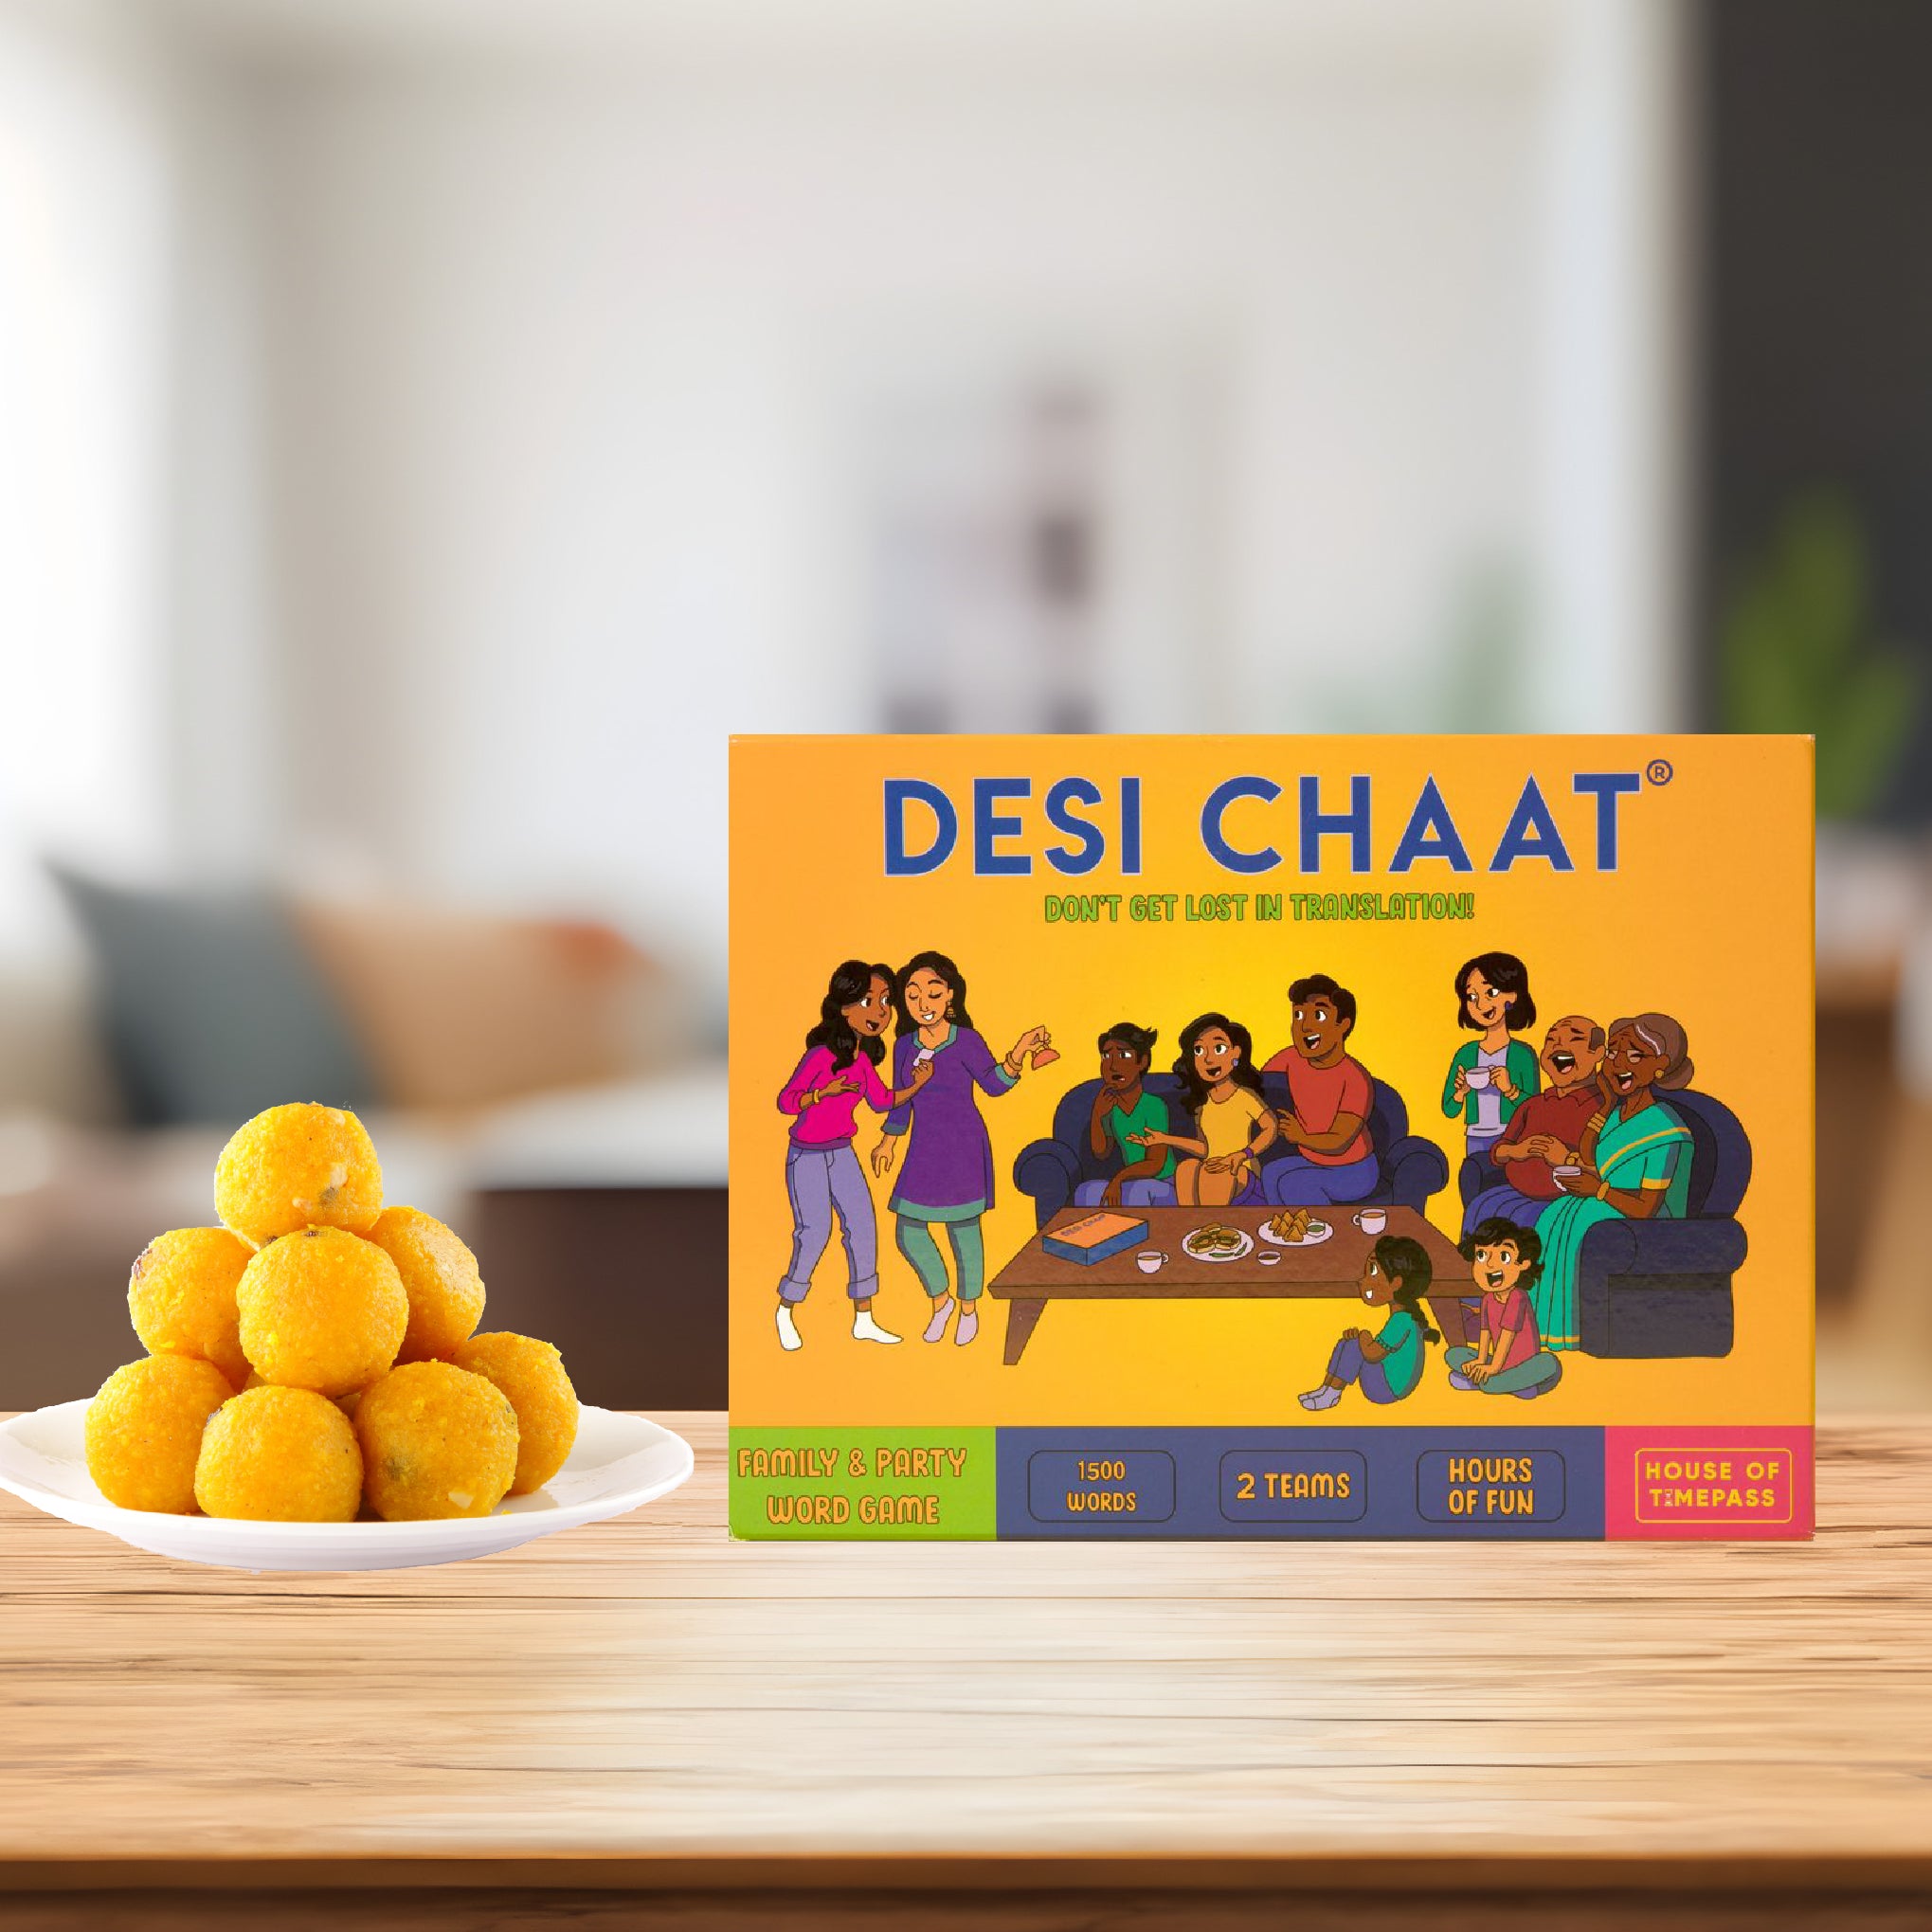 Desi Chaat: The Perfect Desi Housewarming Gift